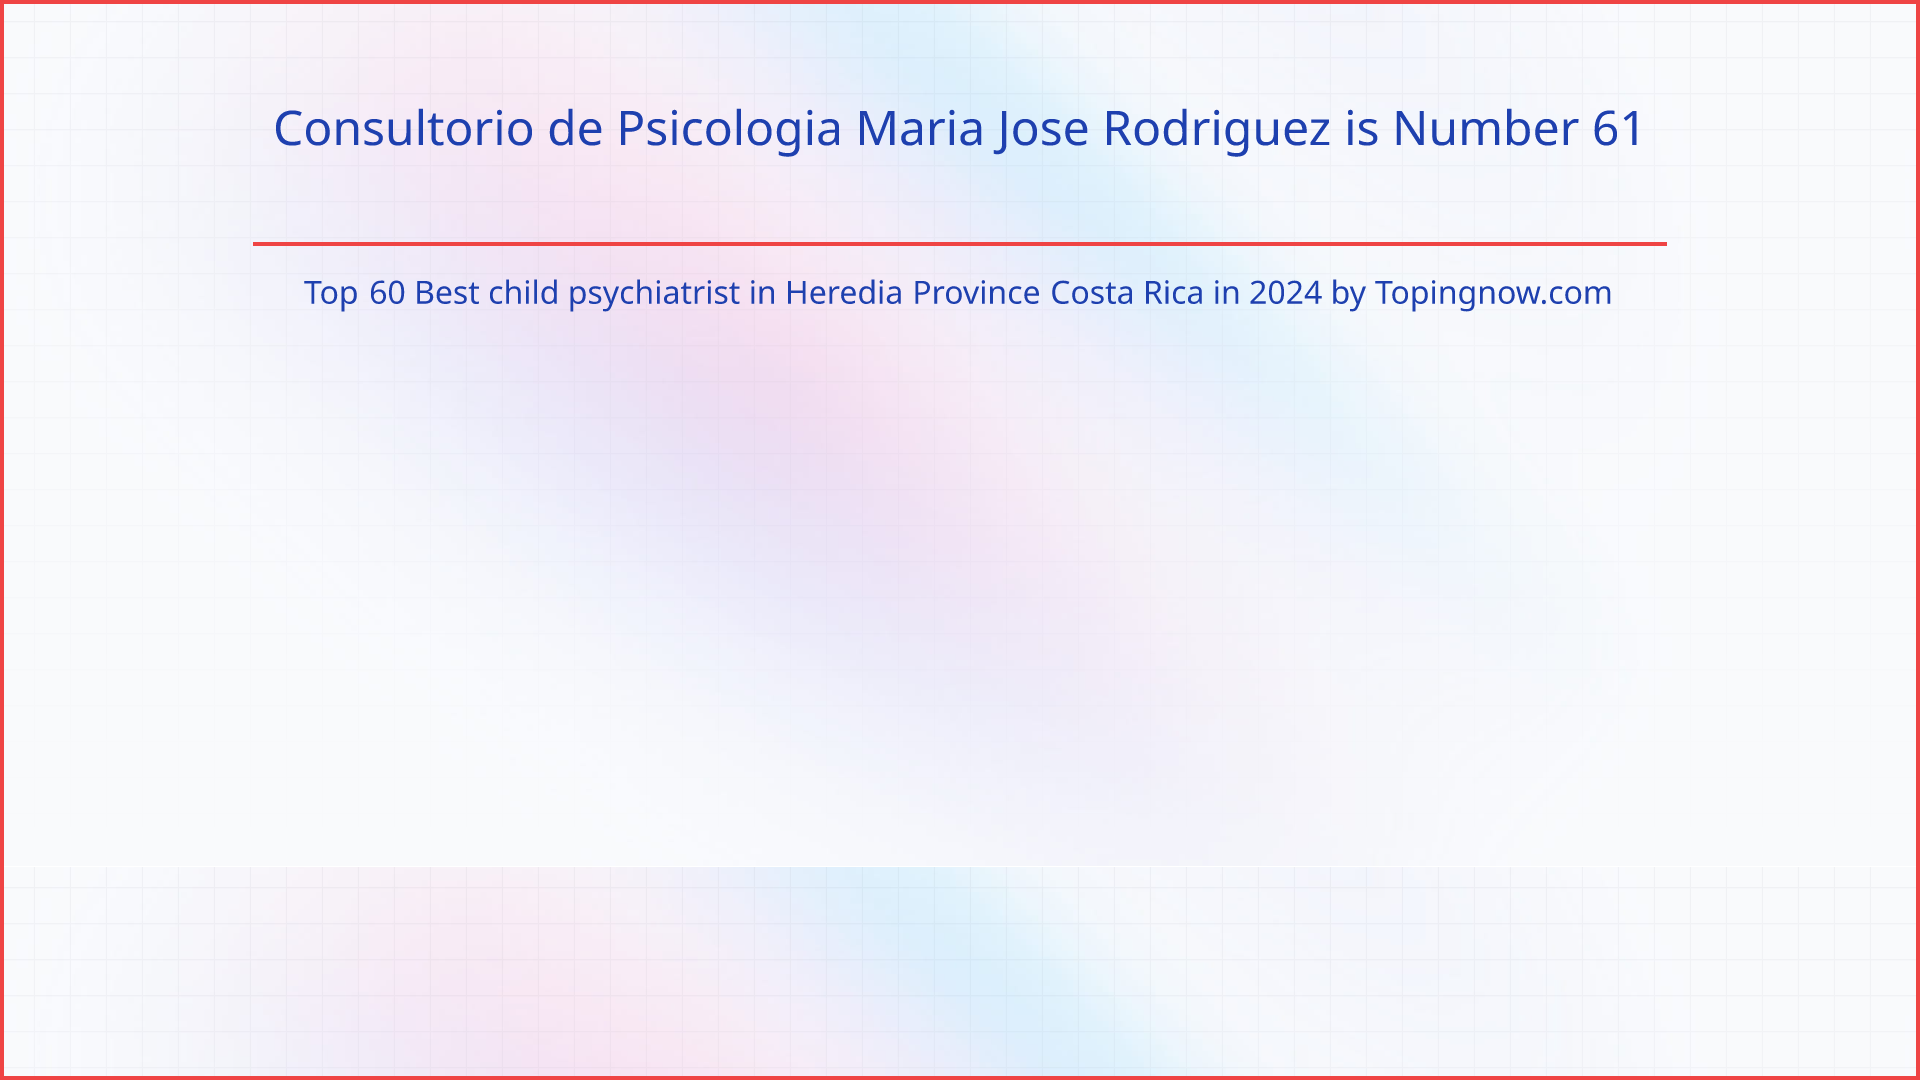 Consultorio de Psicologia Maria Jose Rodriguez: Top 60 Best child psychiatrist in Heredia Province Costa Rica in 2024